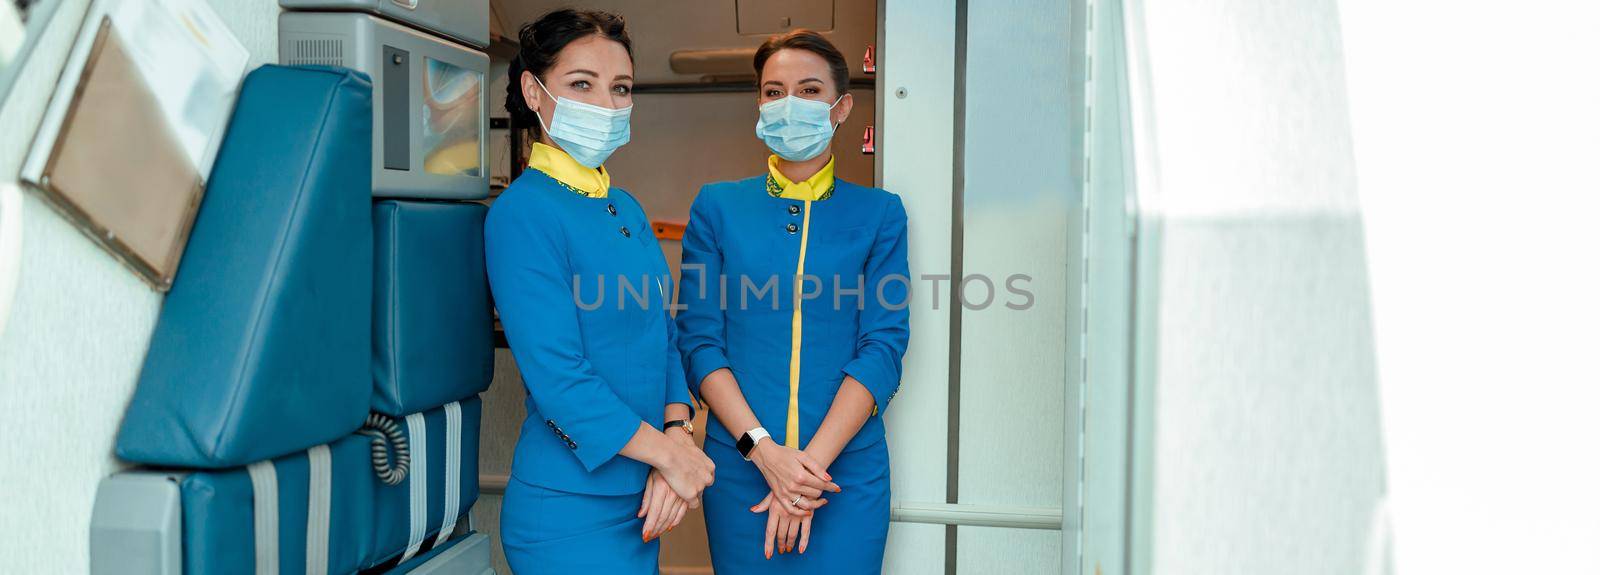 Flight attendants in medical masks standing in airplane cabin by Yaroslav_astakhov